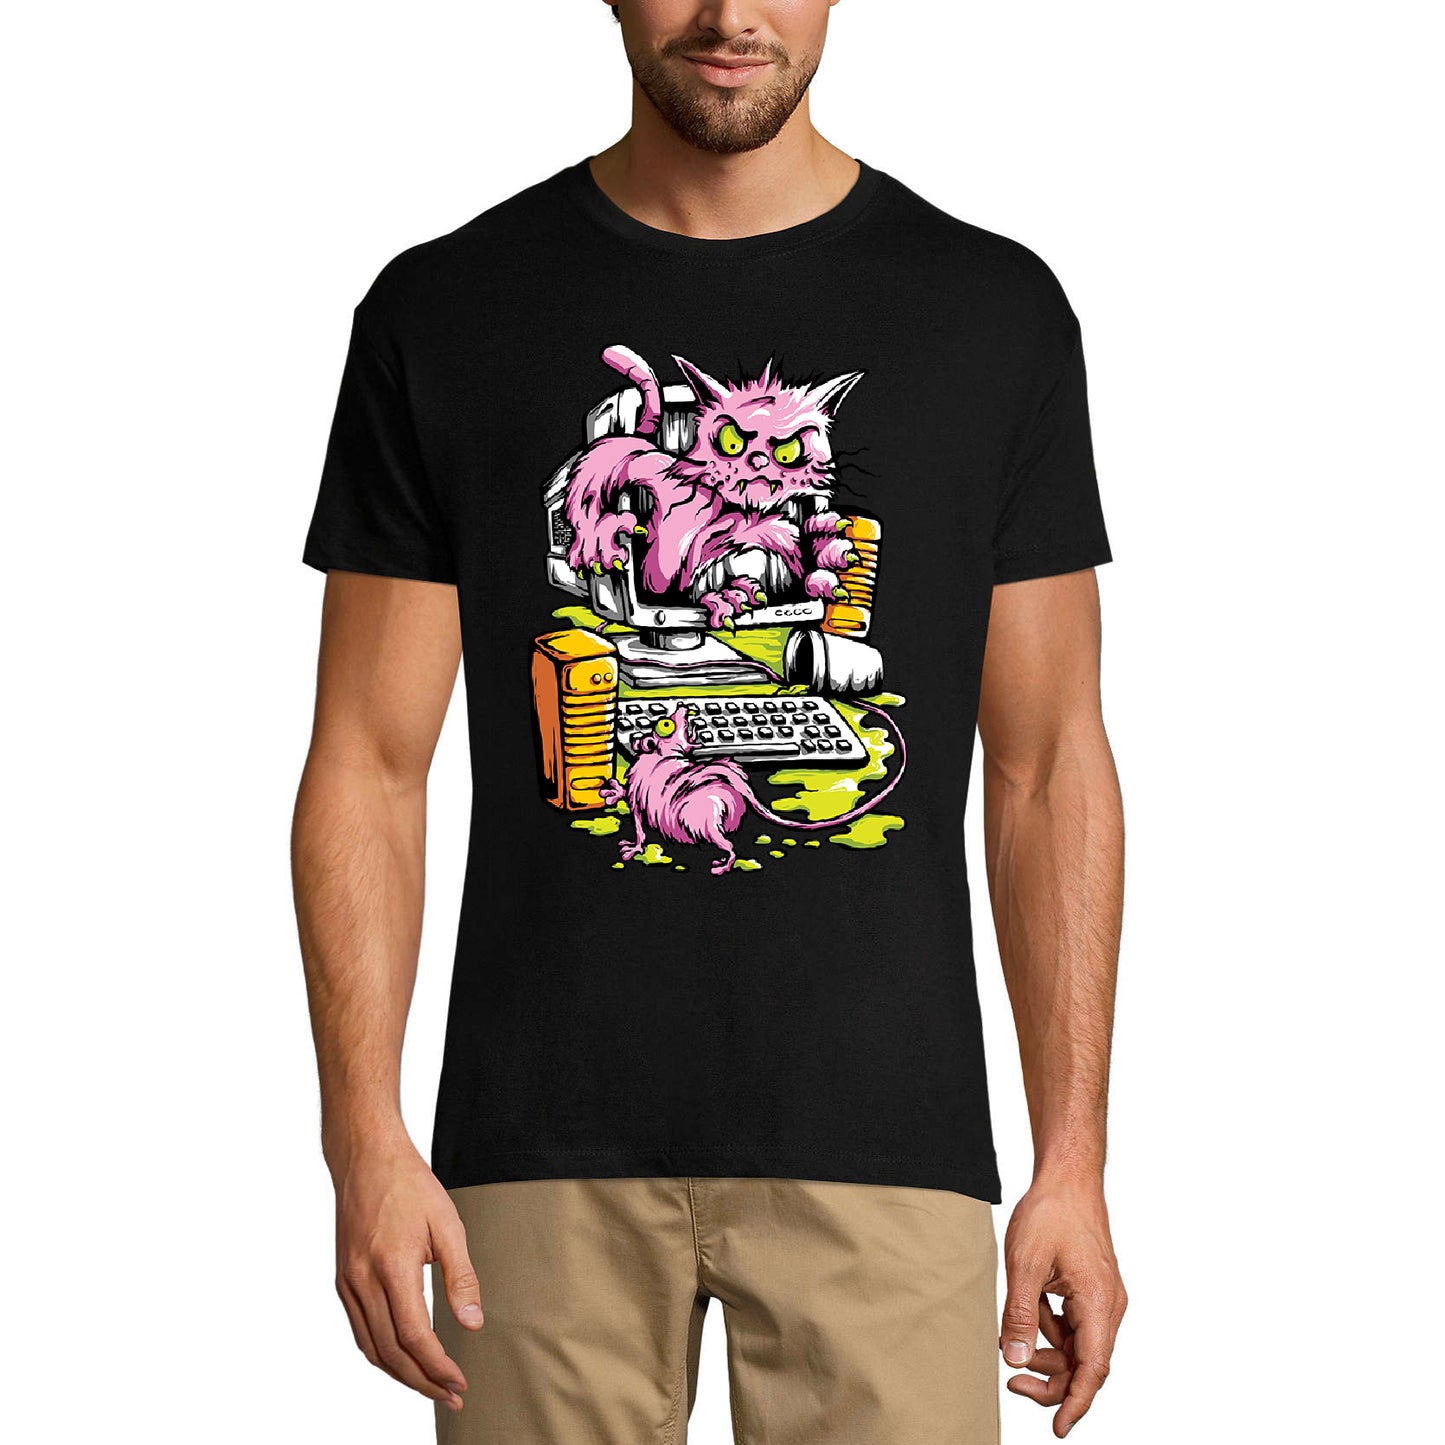 ULTRABASIC Men's Graphic T-Shirt Cat and Mouse - Funny Vintage Shirt for Men